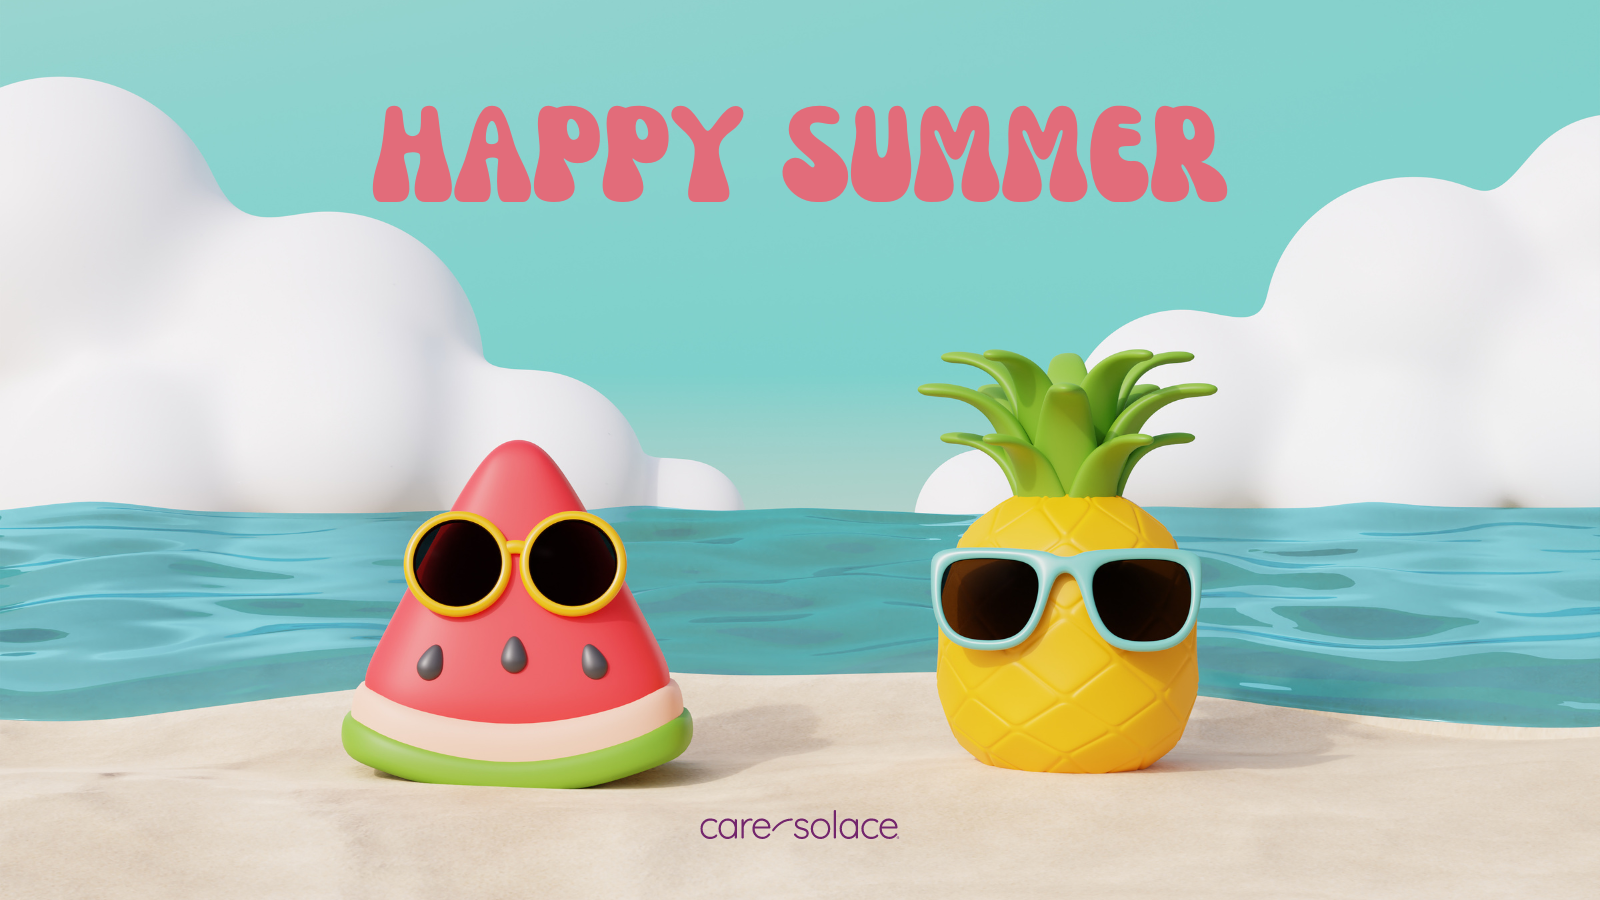 Happy Summer a slice of cartoon watermellon and a cartoon pineapple wearing sun glasses on the beach